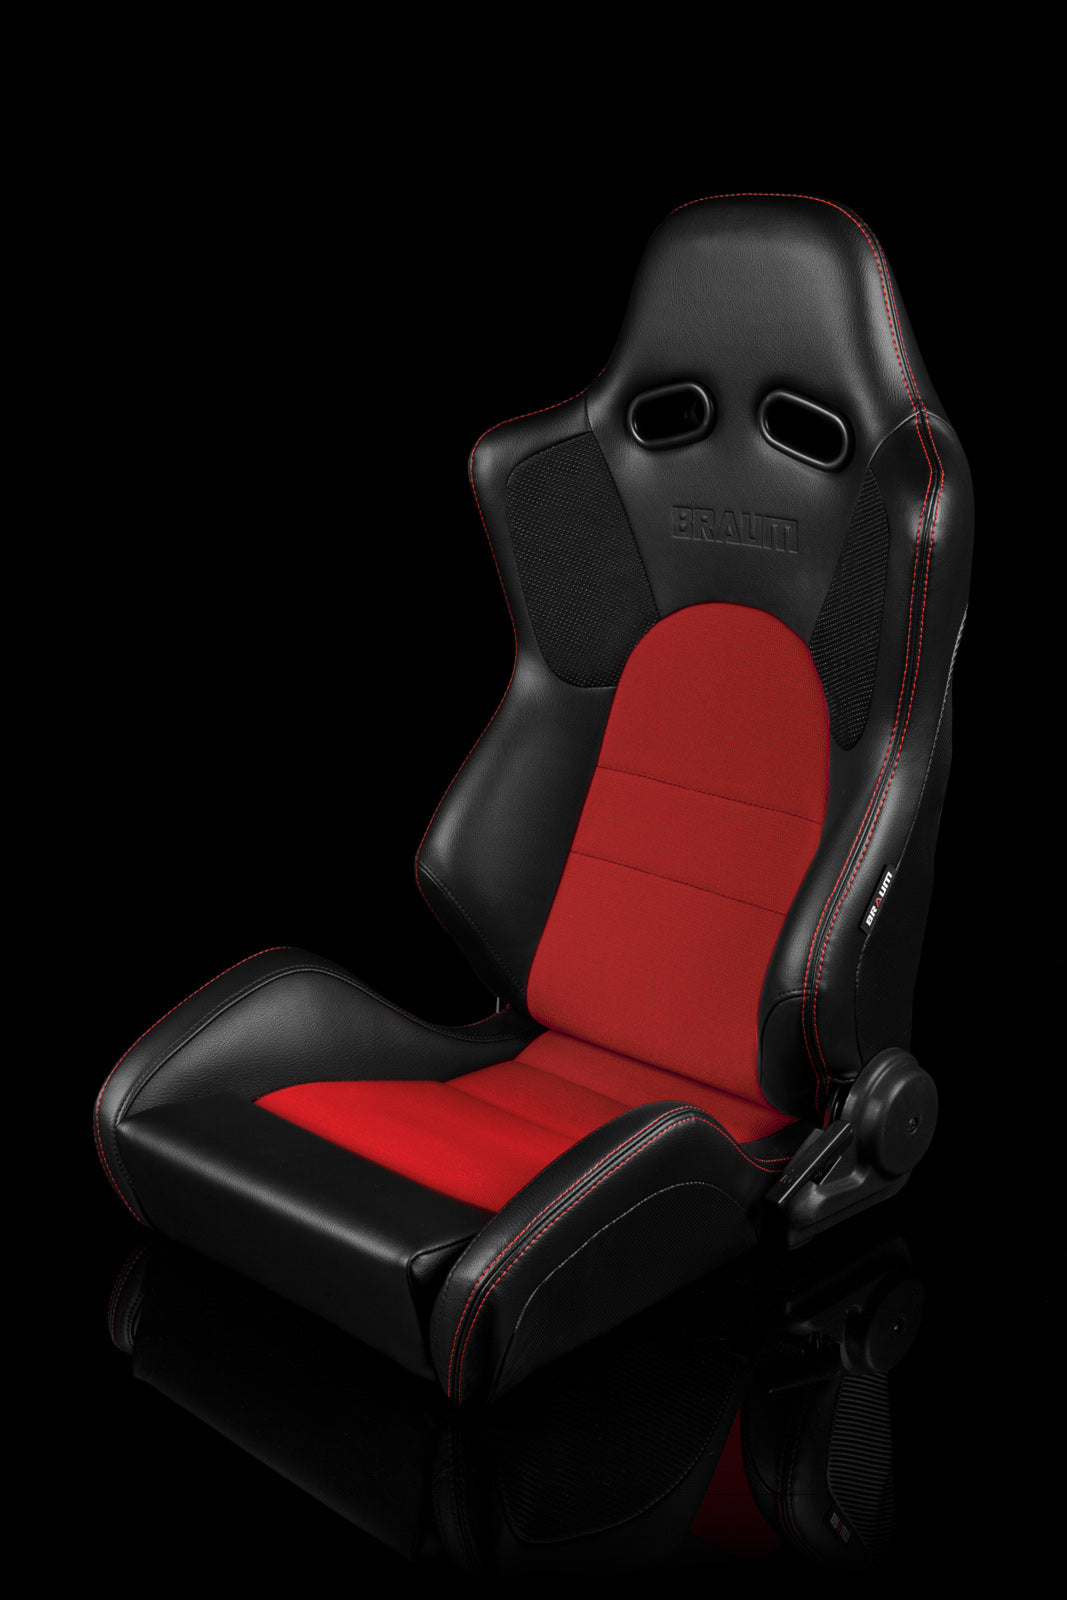 ADVAN Series Sport Reclinable Seats